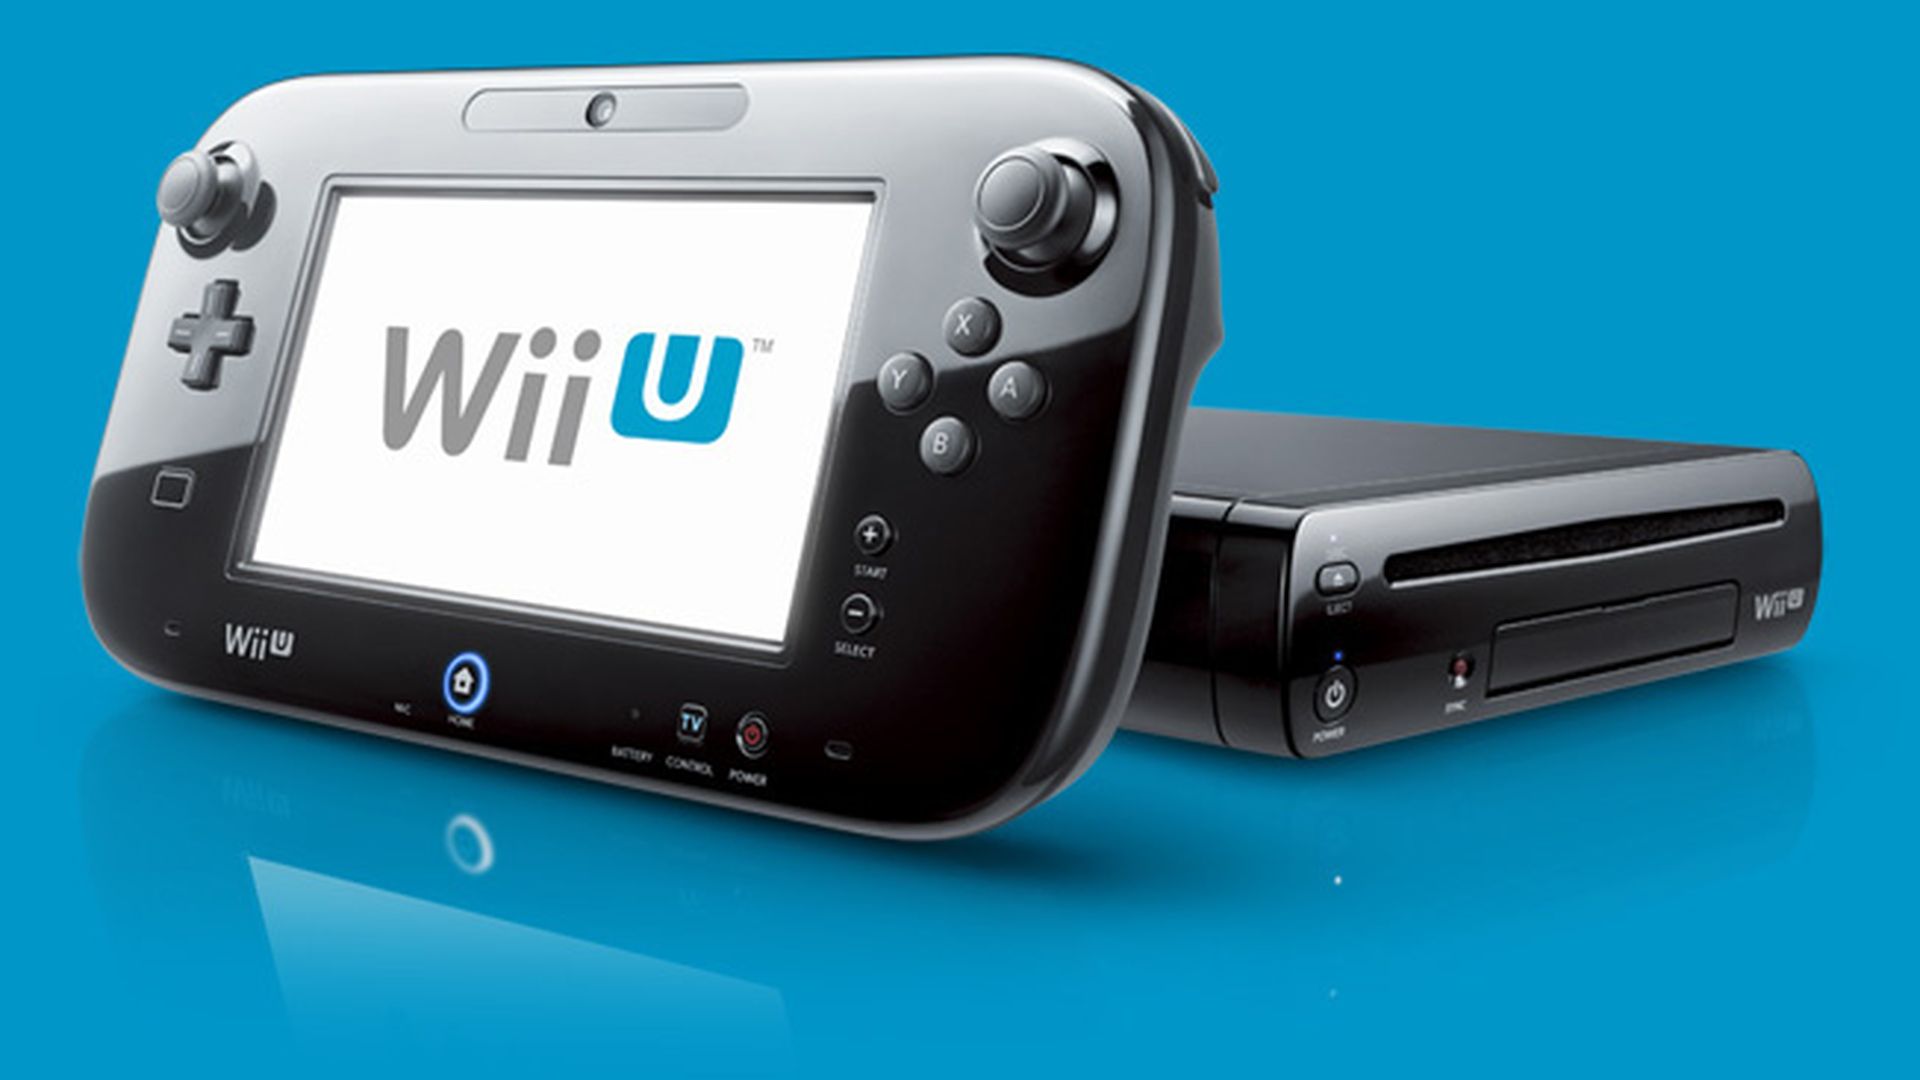 WiiU Retrospective: Wii had op de van de WiiU"